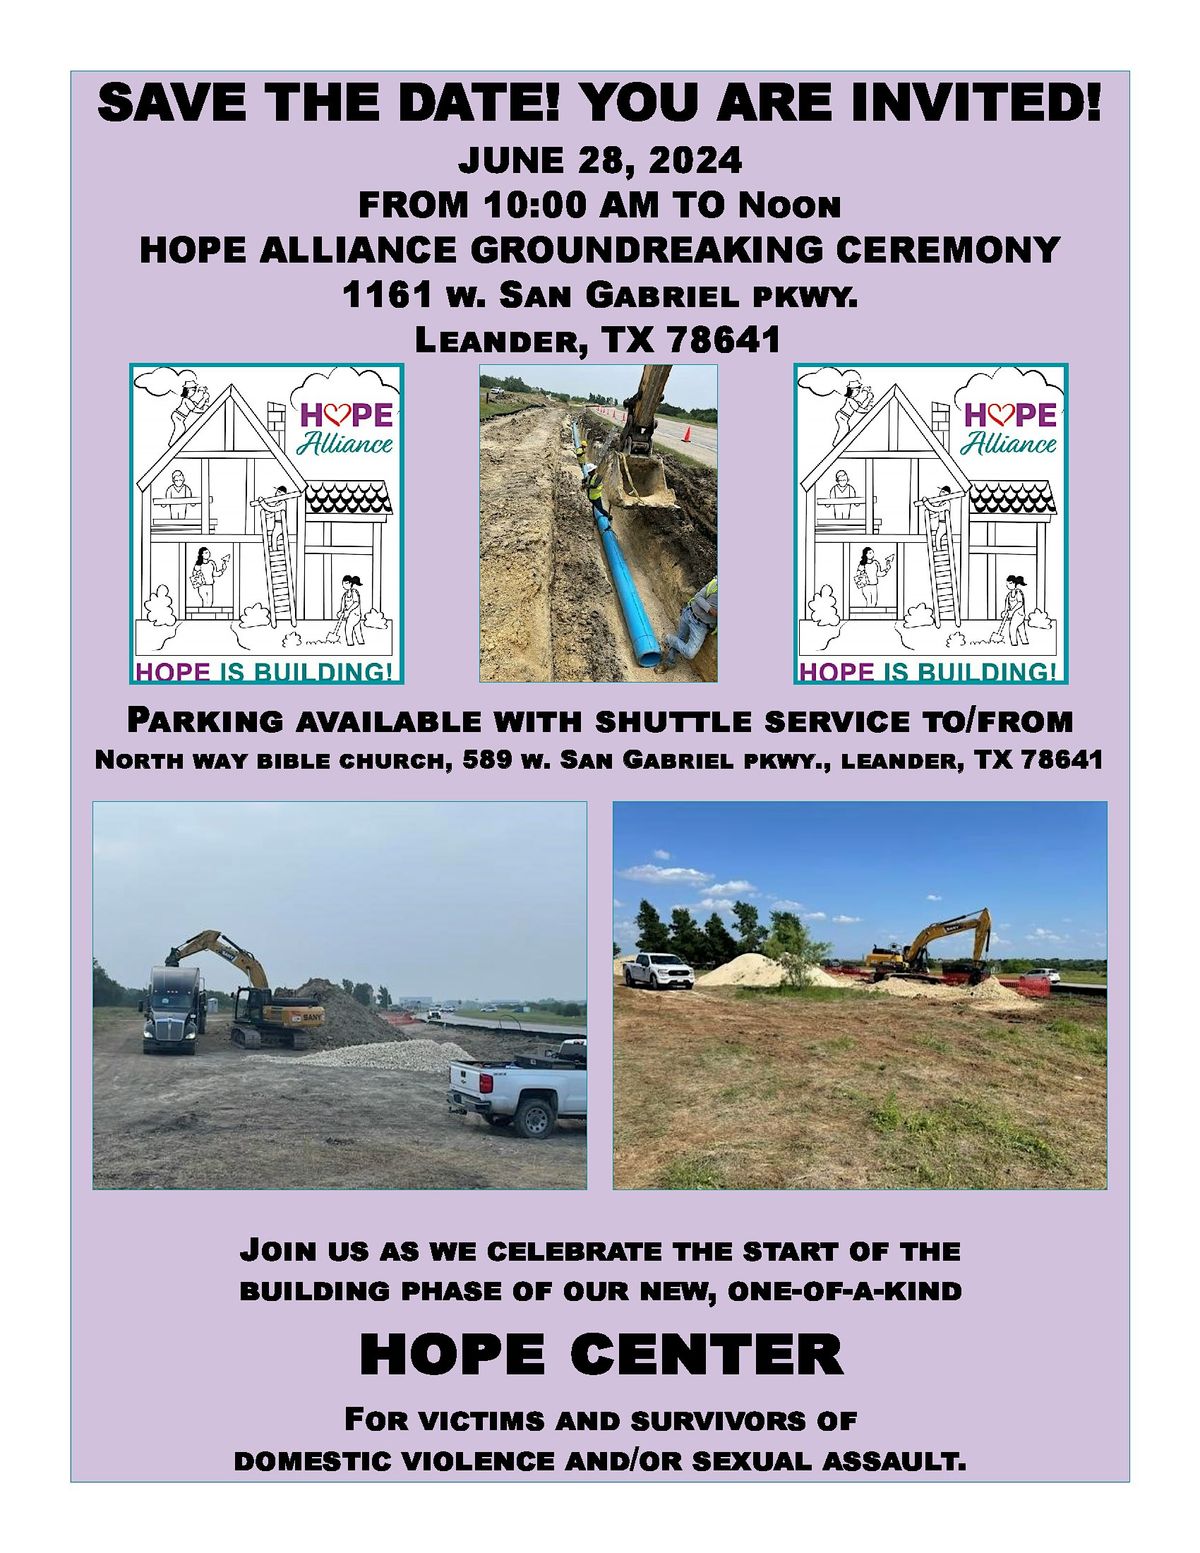 HOPE Center Groundbreaking Ceremony